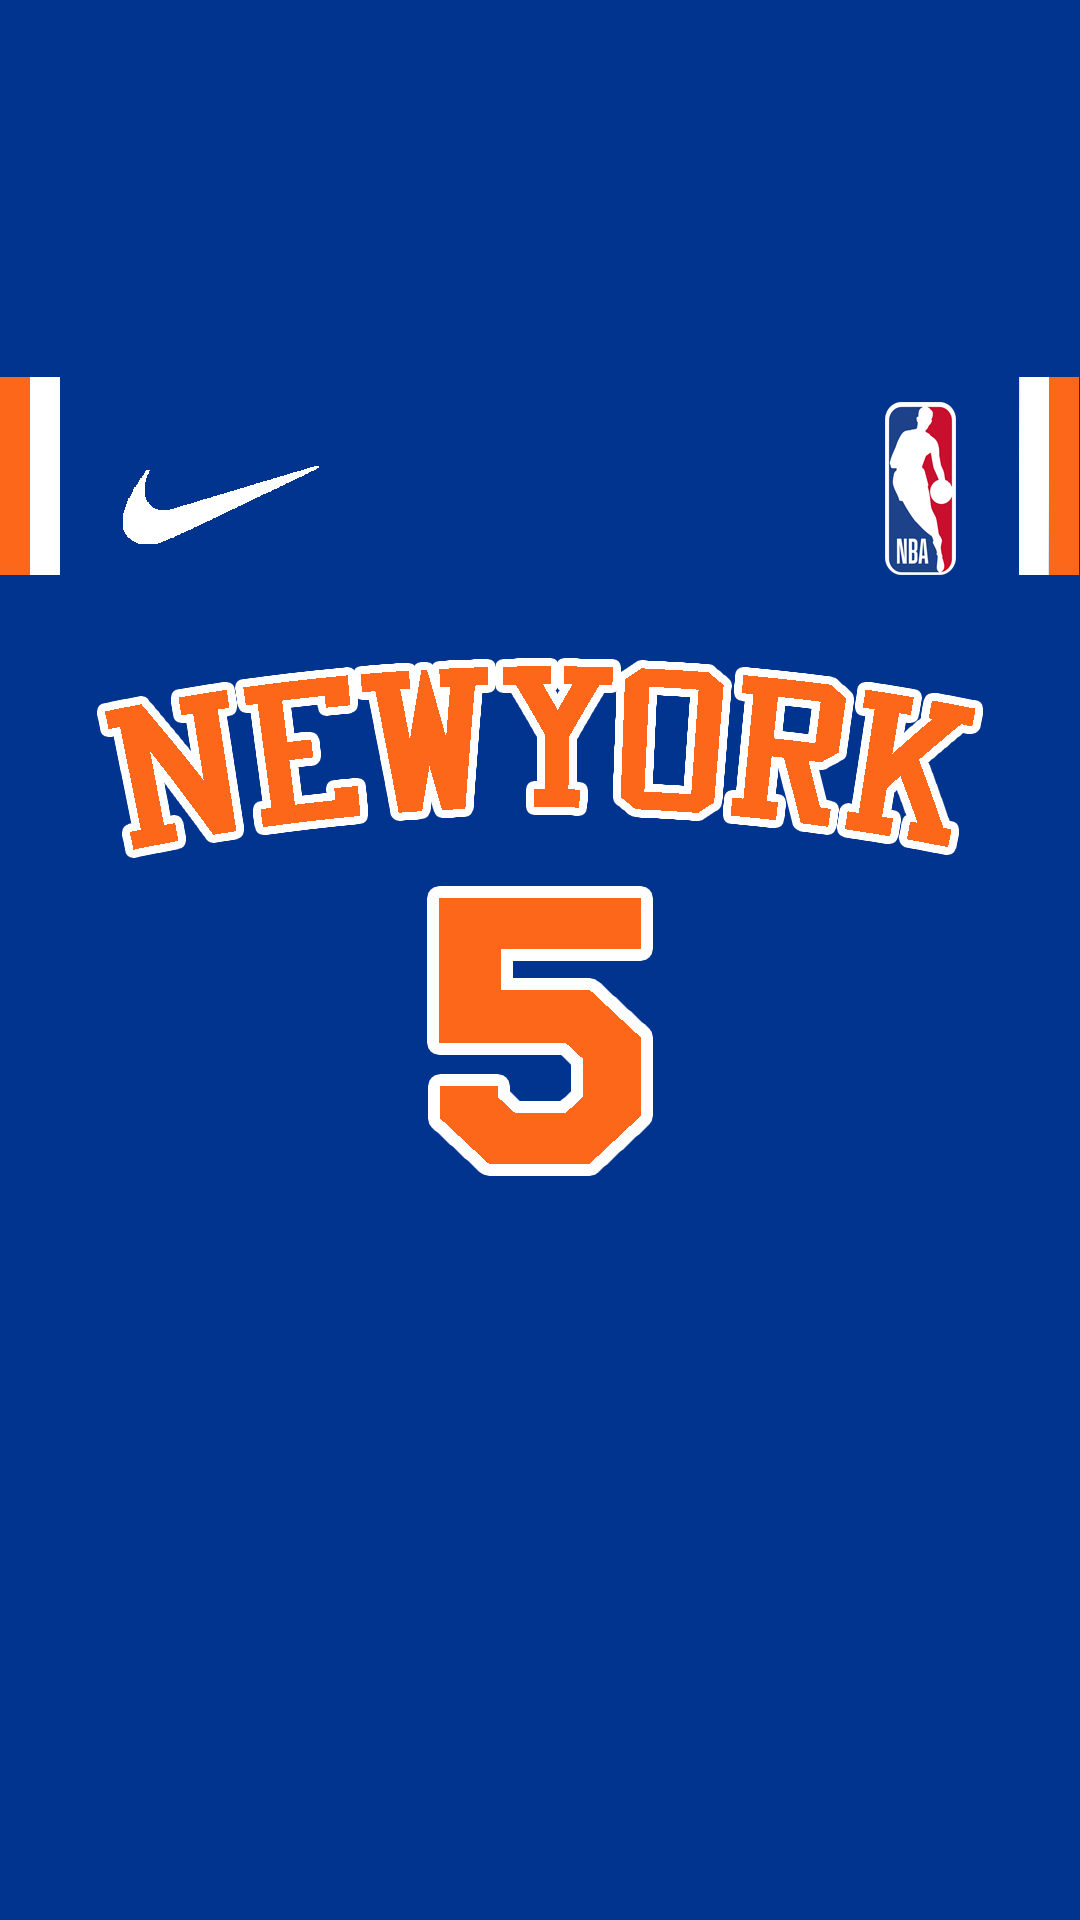 Knicks Smith Jr. Knicks, Basketball wallpaper, Basketball